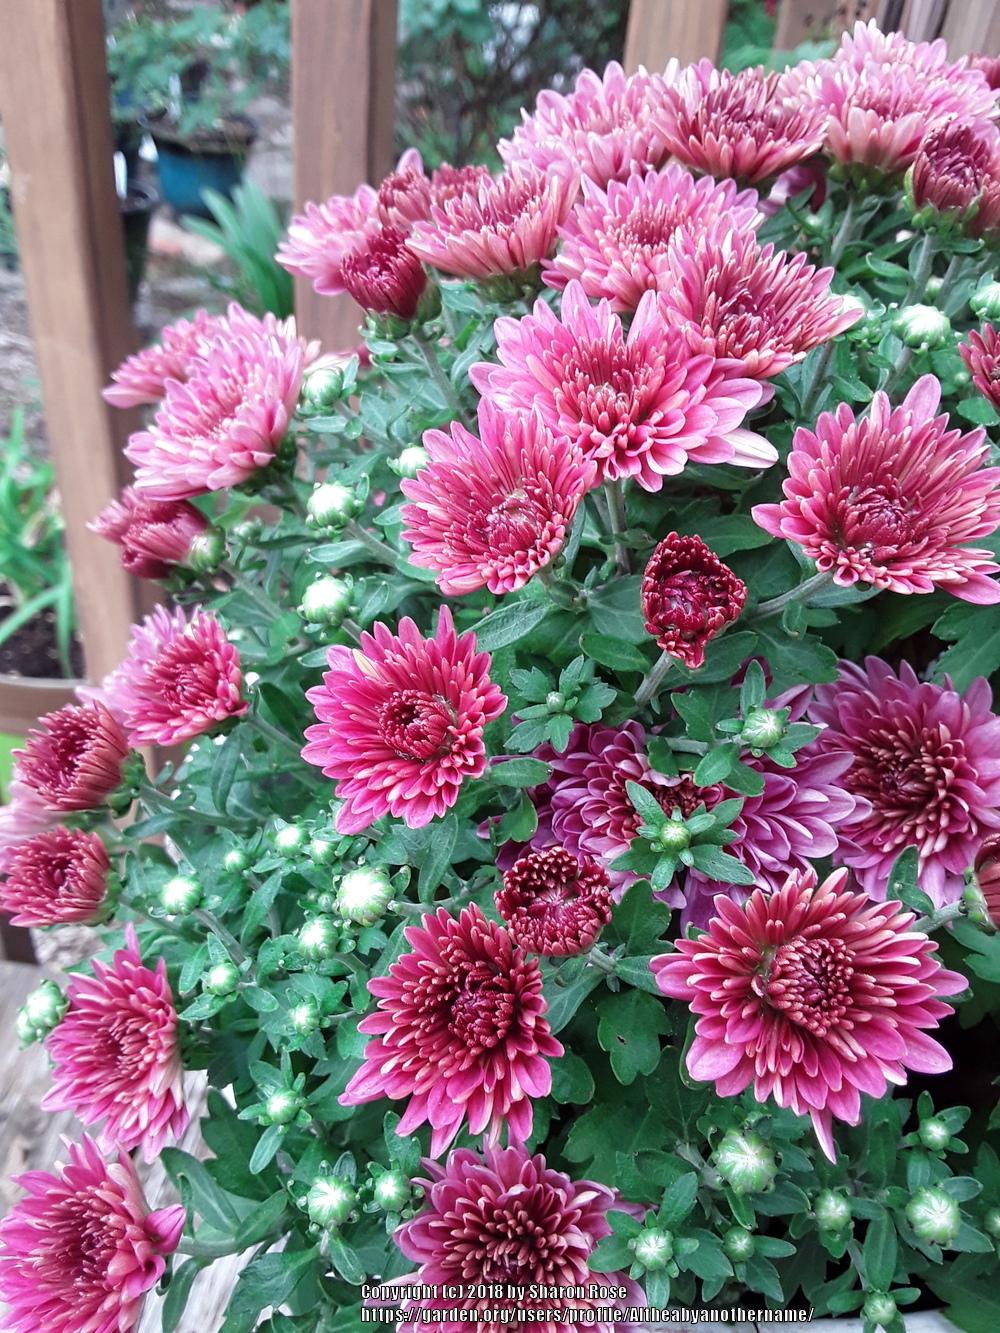 Photo of Chrysanthemum uploaded by Altheabyanothername